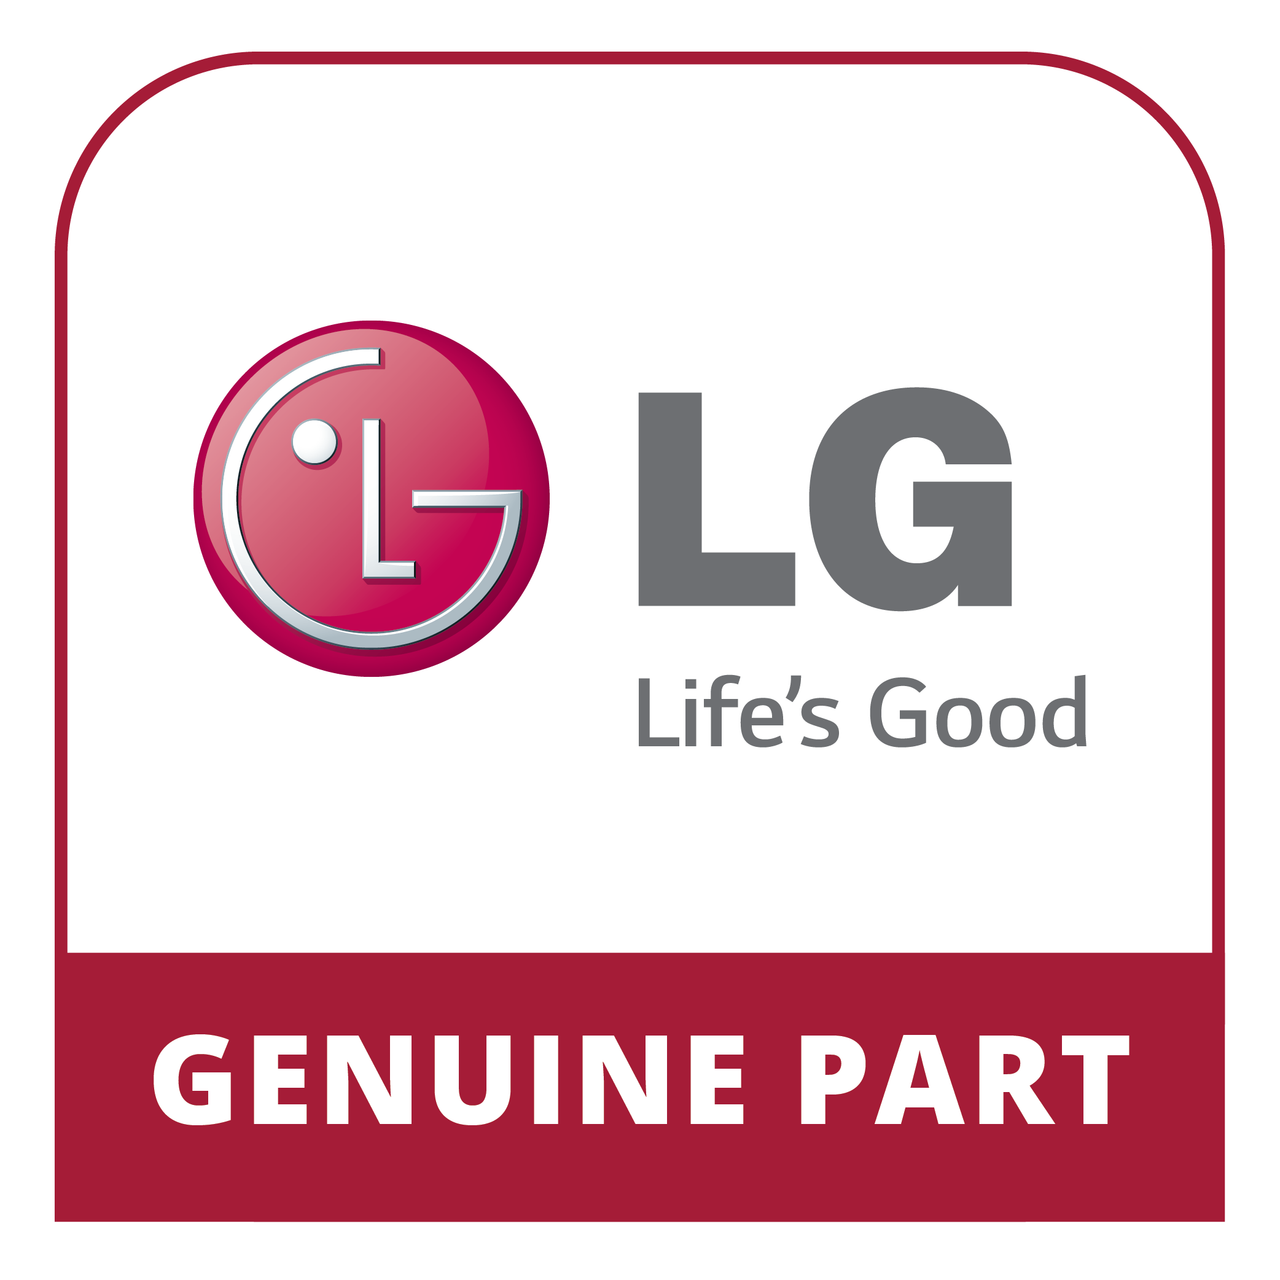 LG 4848A20007R - Accumulator - Genuine LG Part